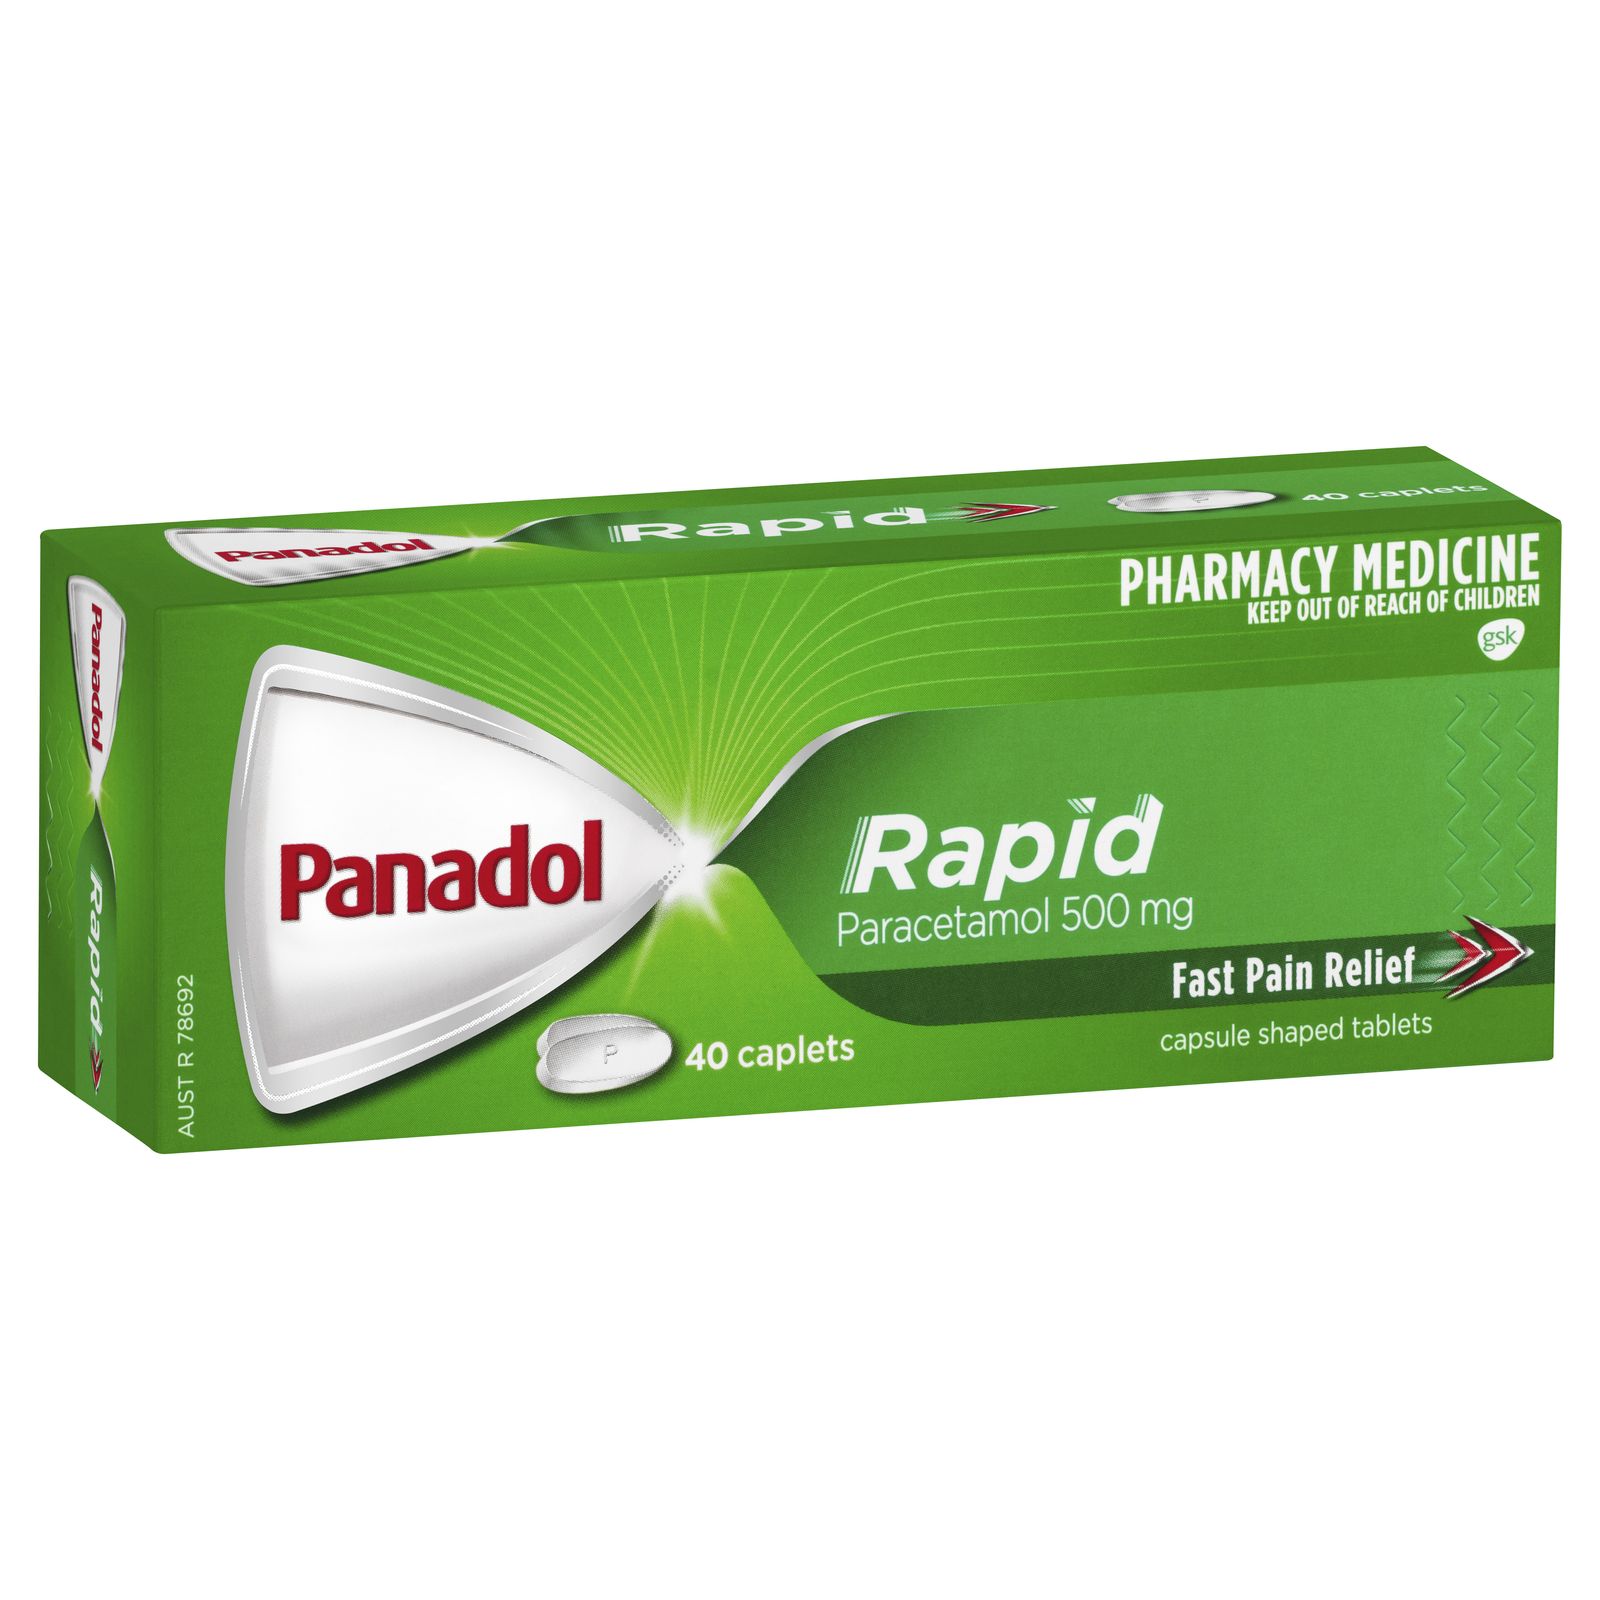 Panadol Rapid 40caps 2557096 Your Online Pharmacy New Zealand